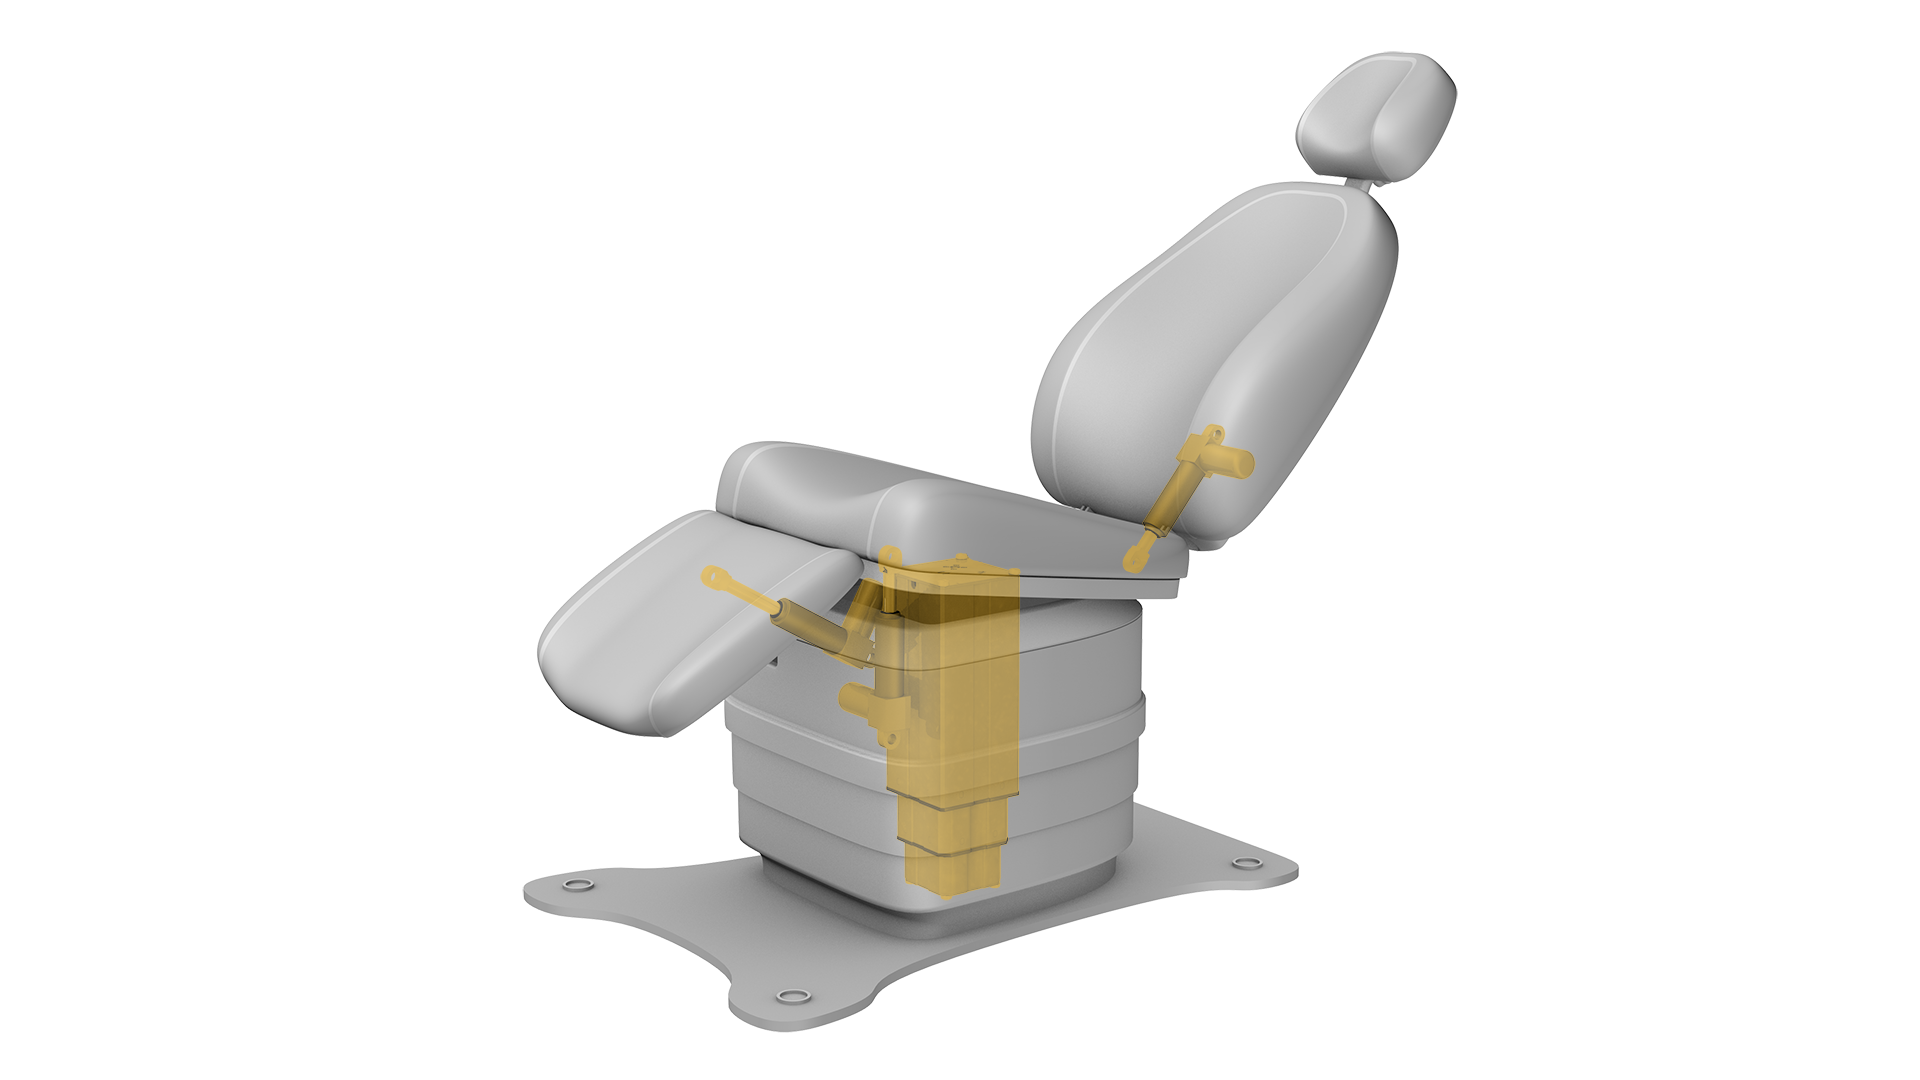 Procedure patient chairs application